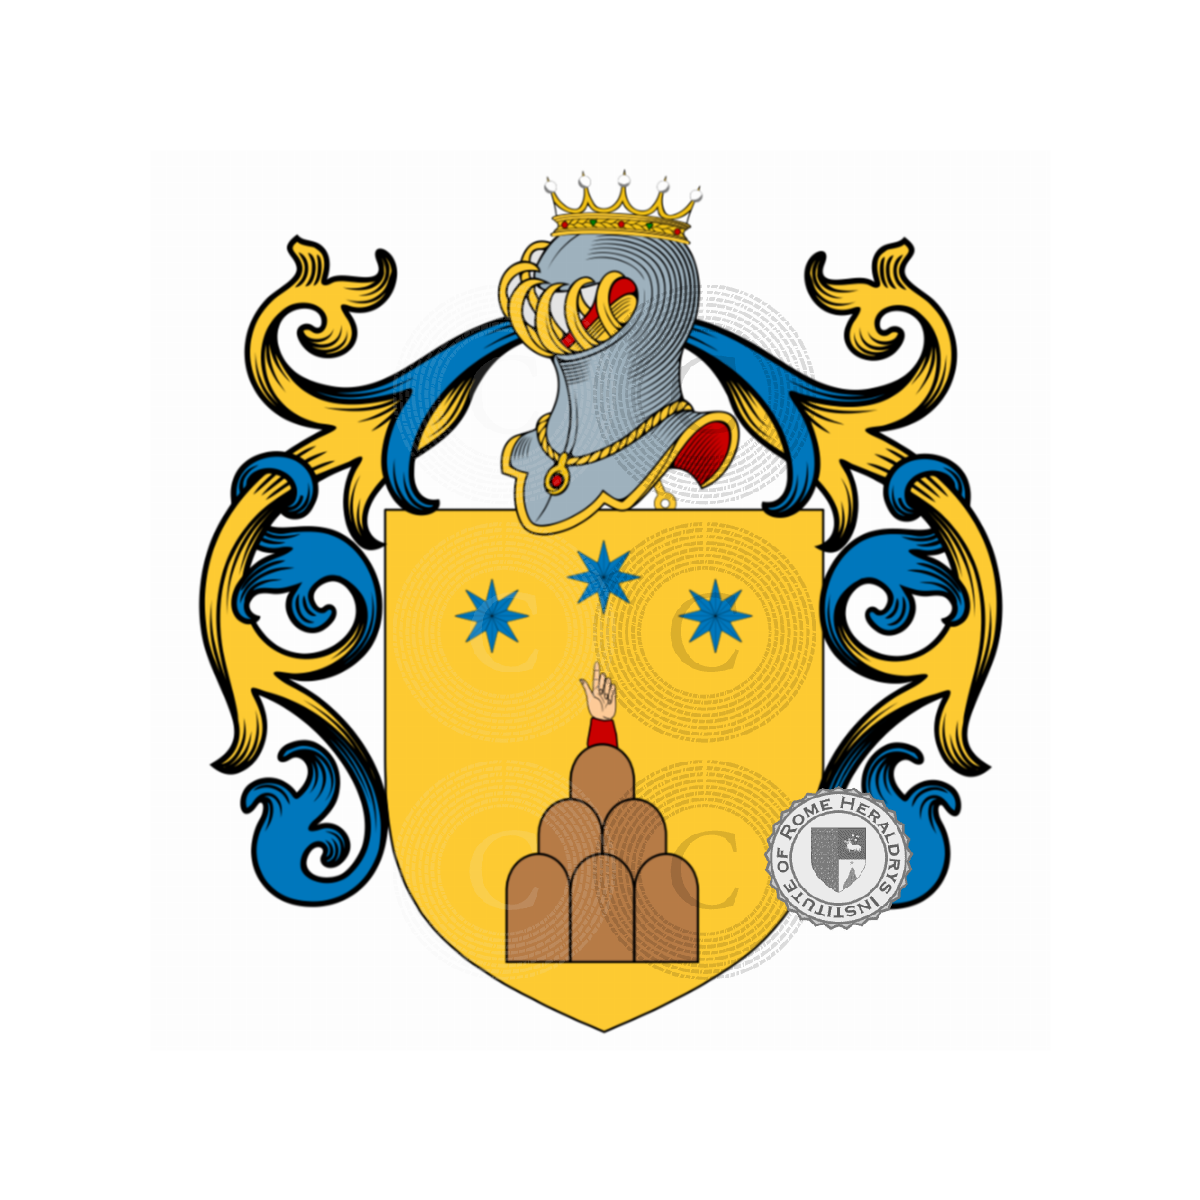 Coat of arms of familyFranceschi, de Franceschi